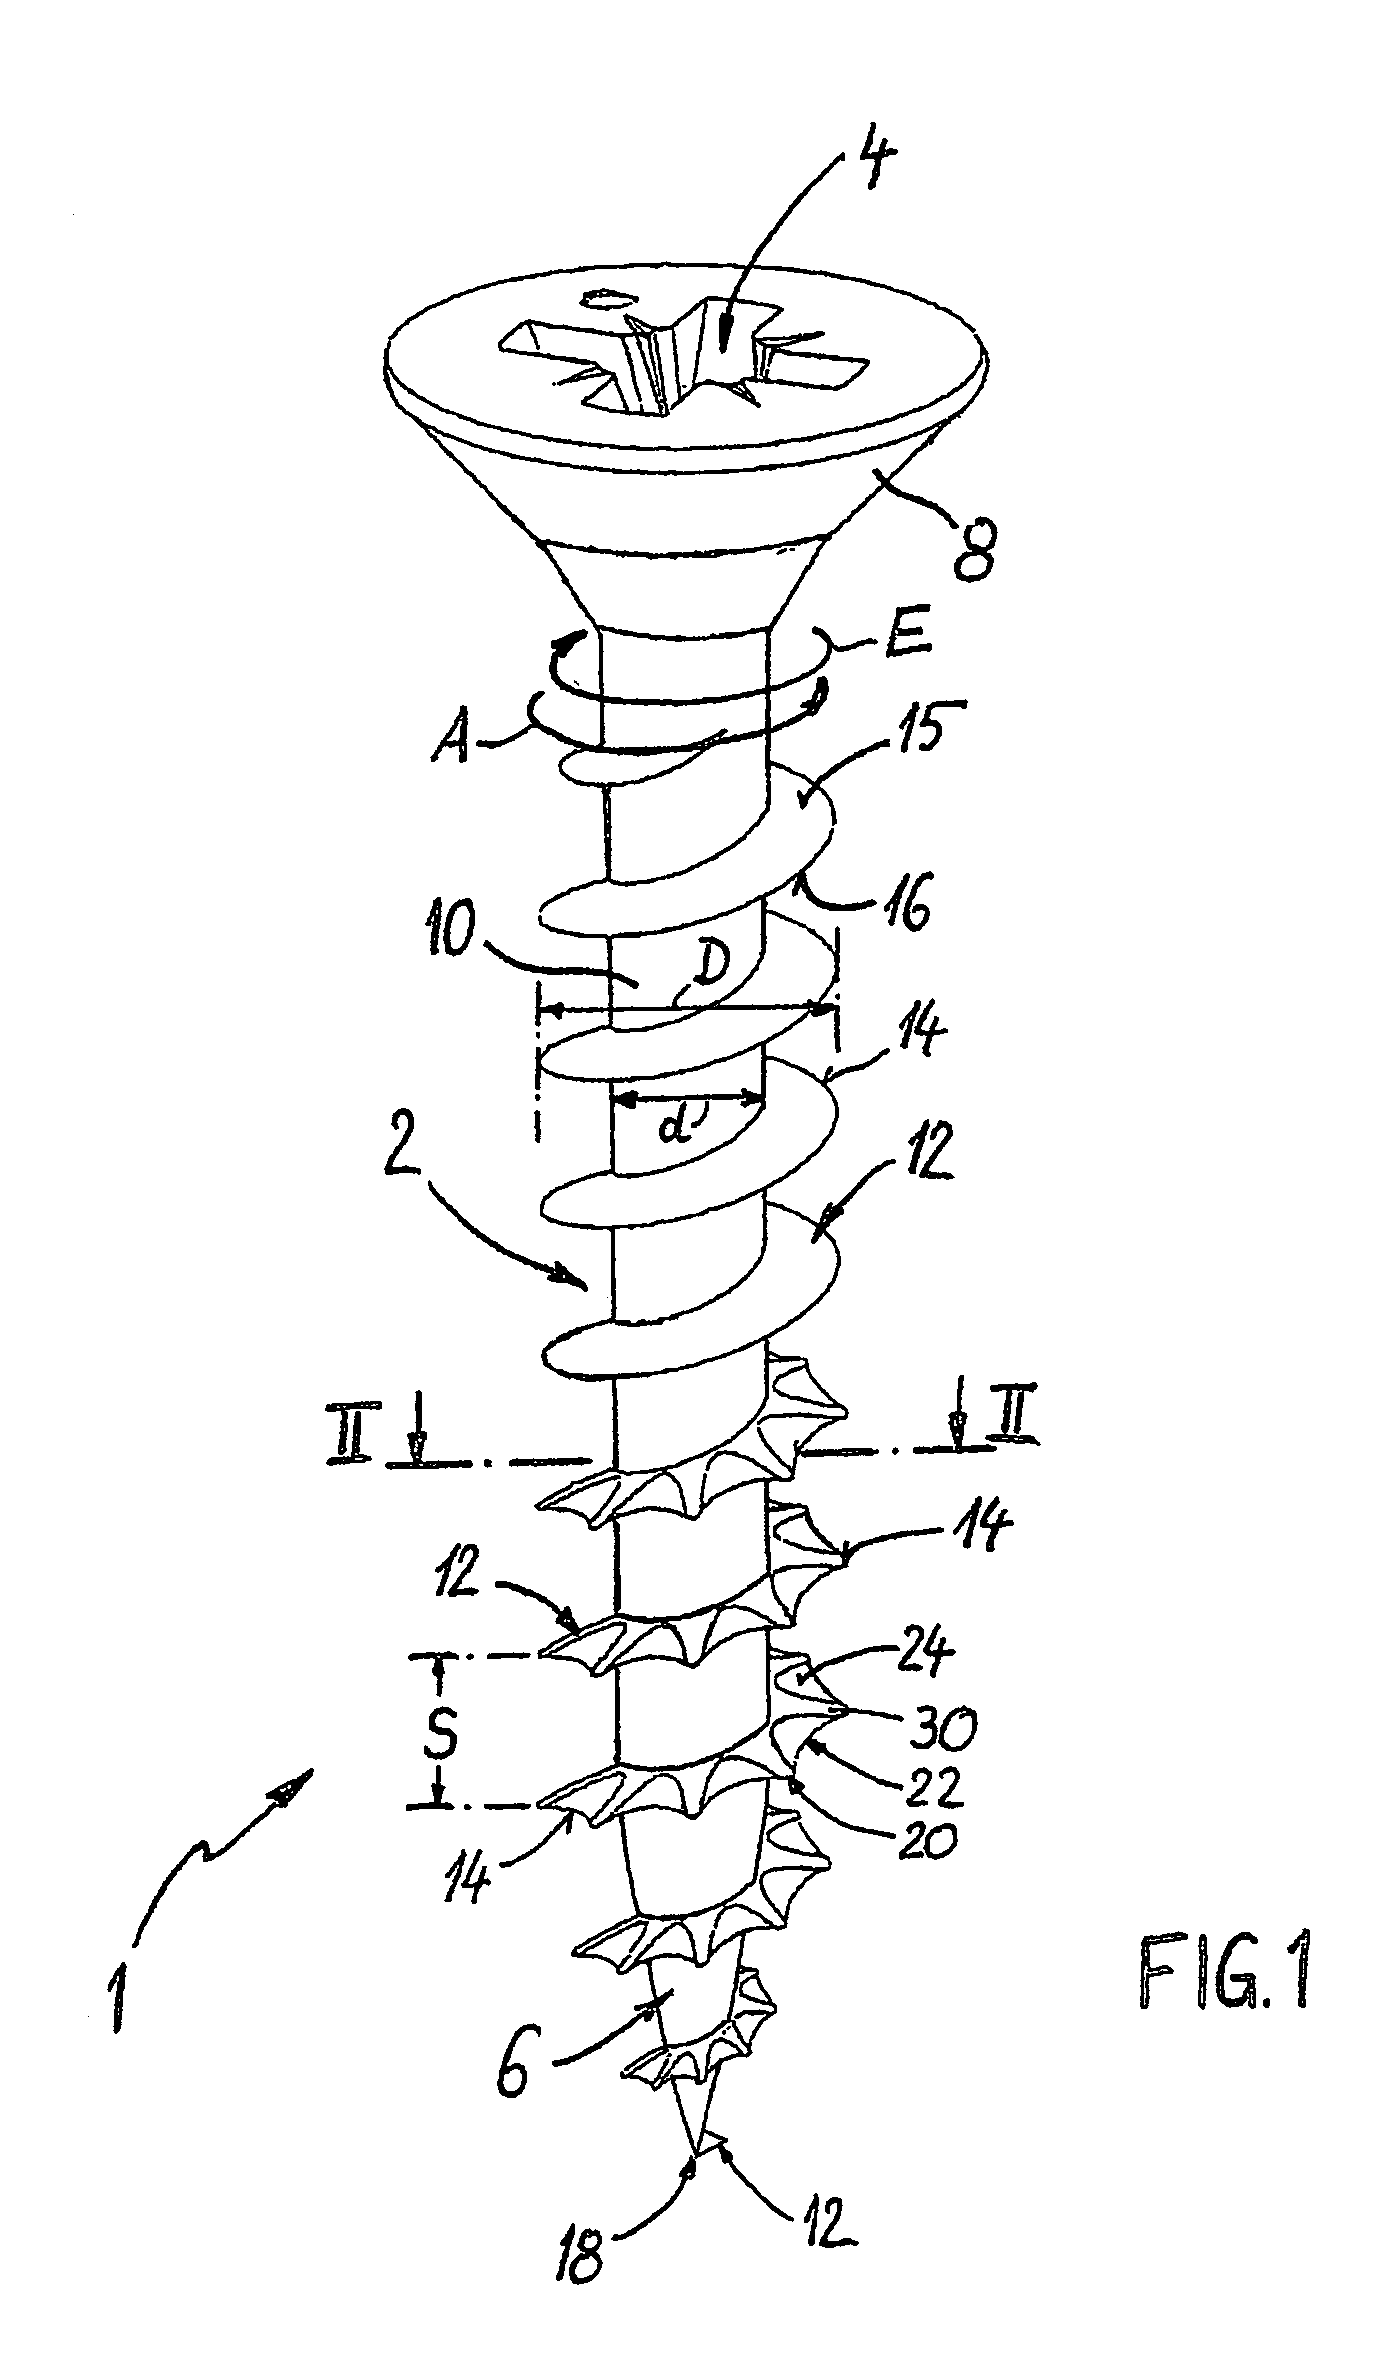 Thread-forming screw fastener